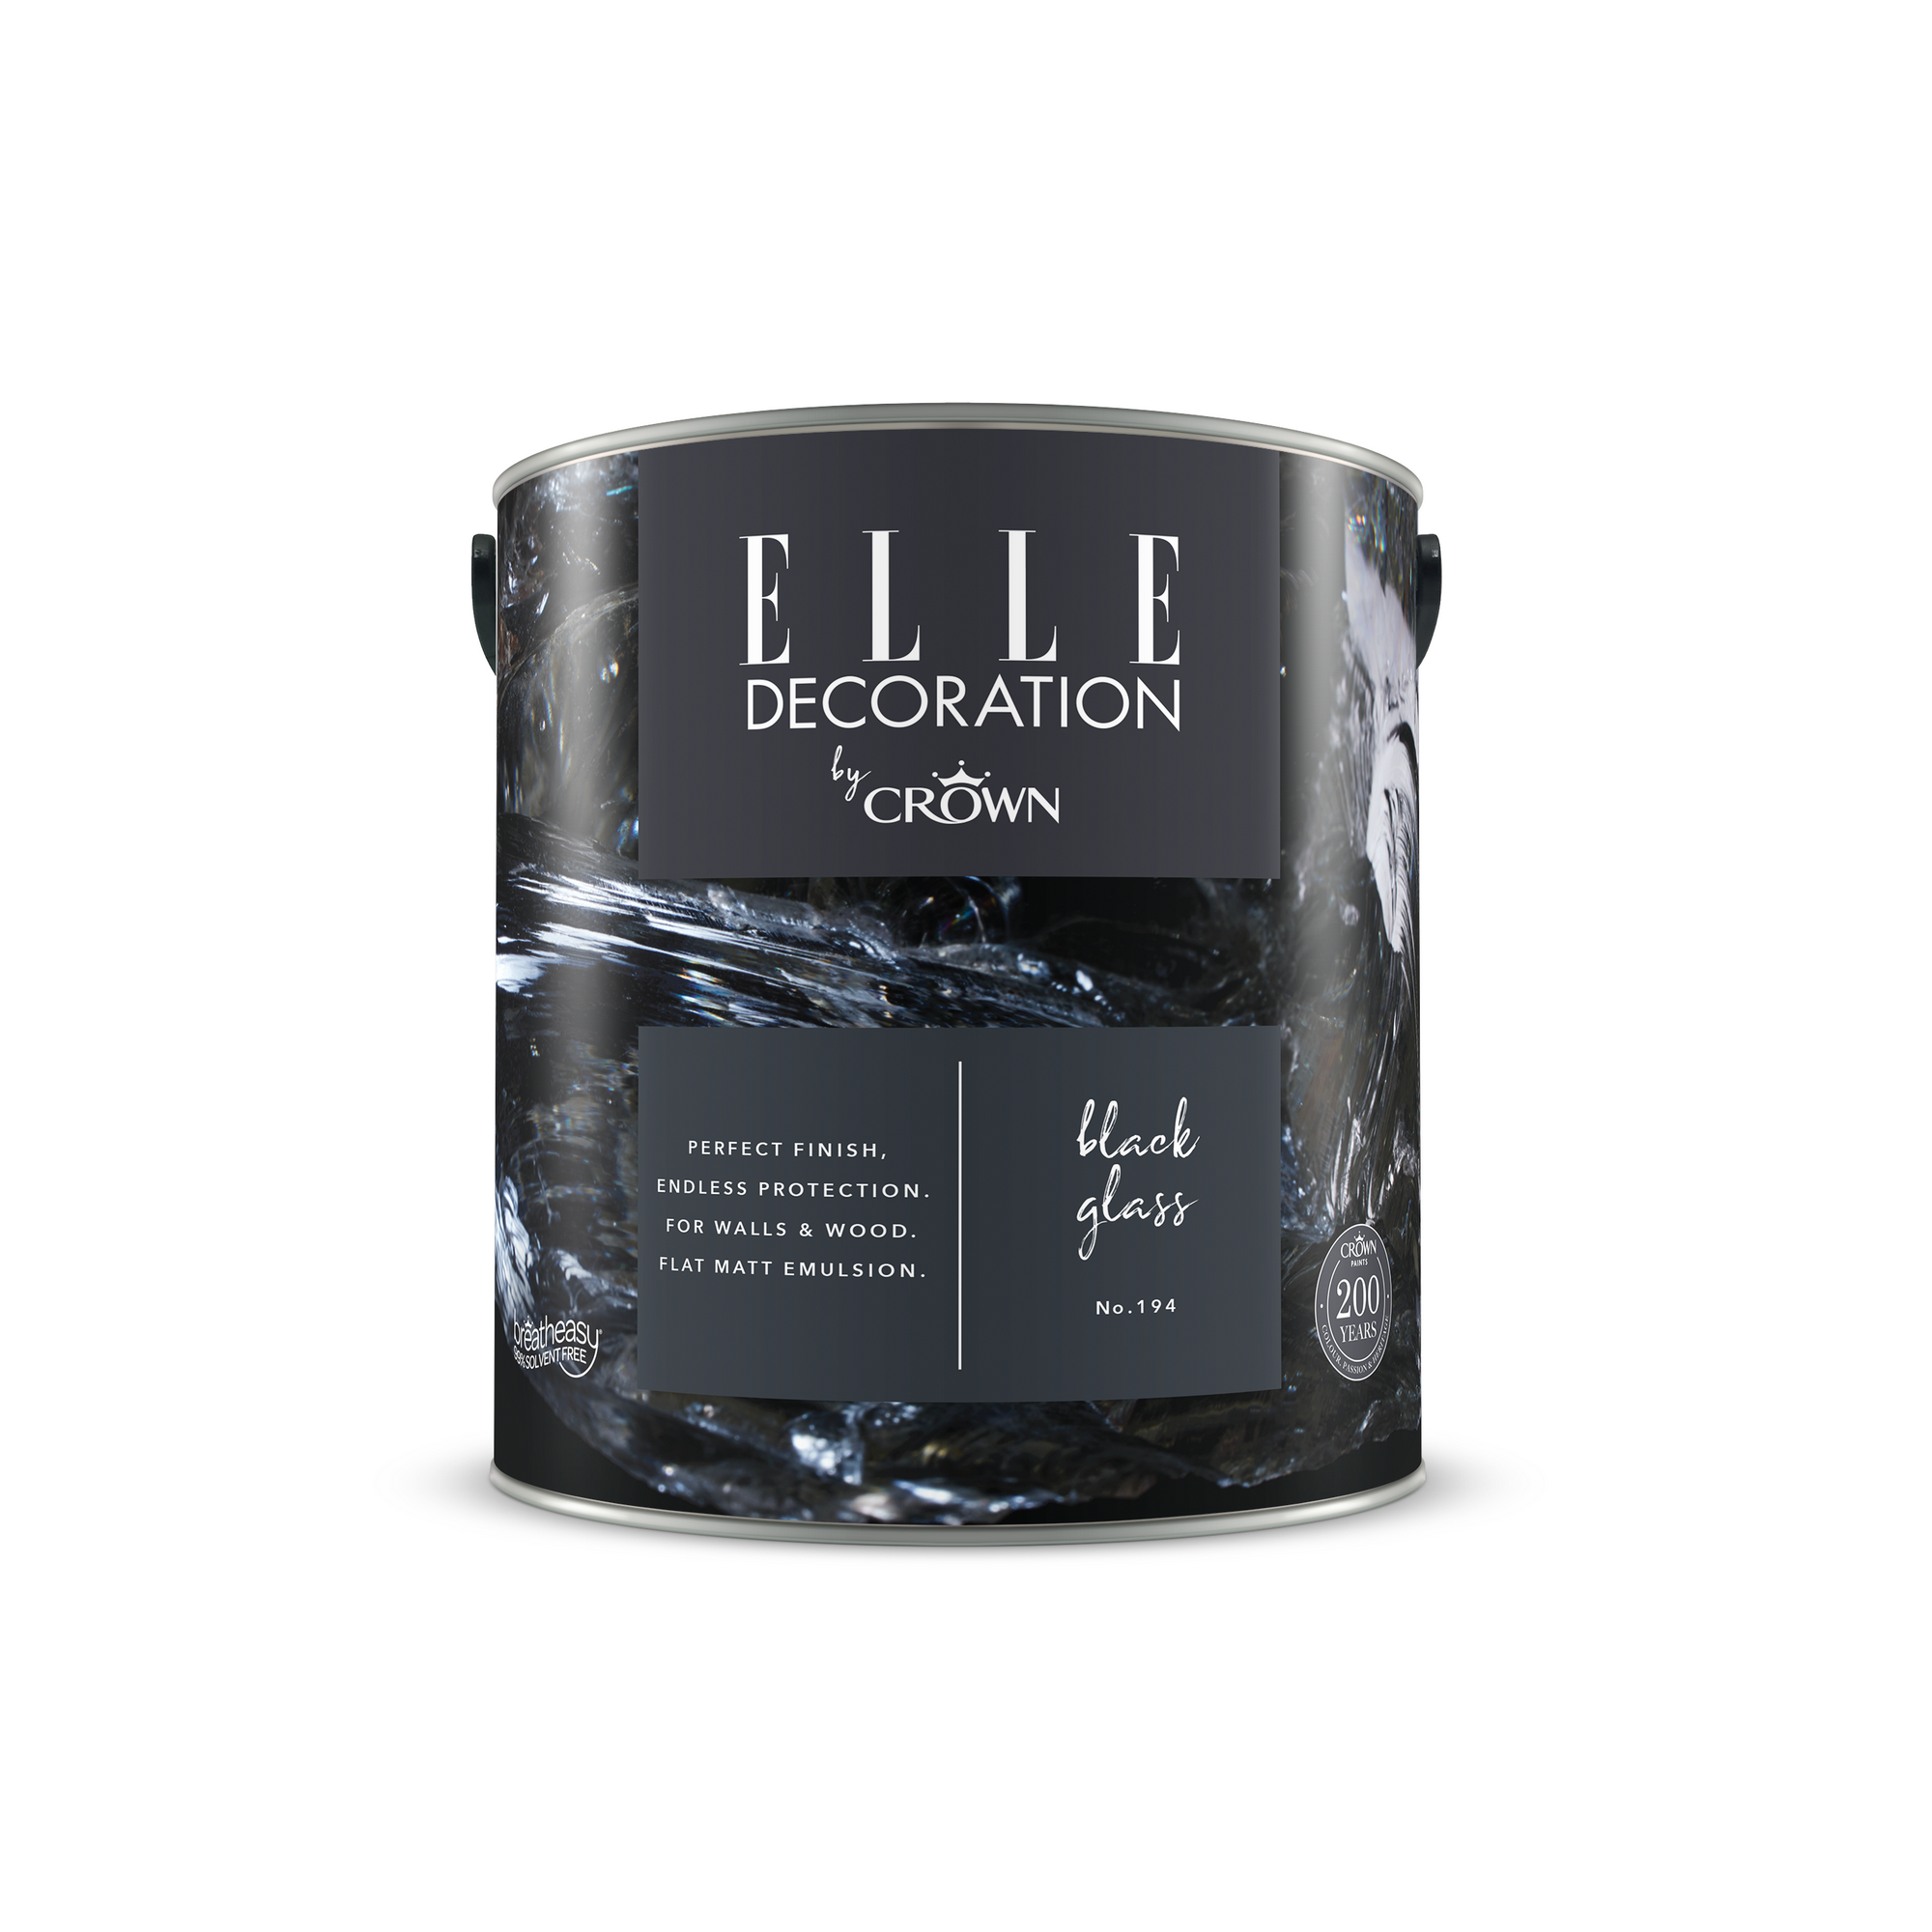 Wandfarbe 'Black Glass No. 194' schwarzgrau matt 2,5 l + product picture